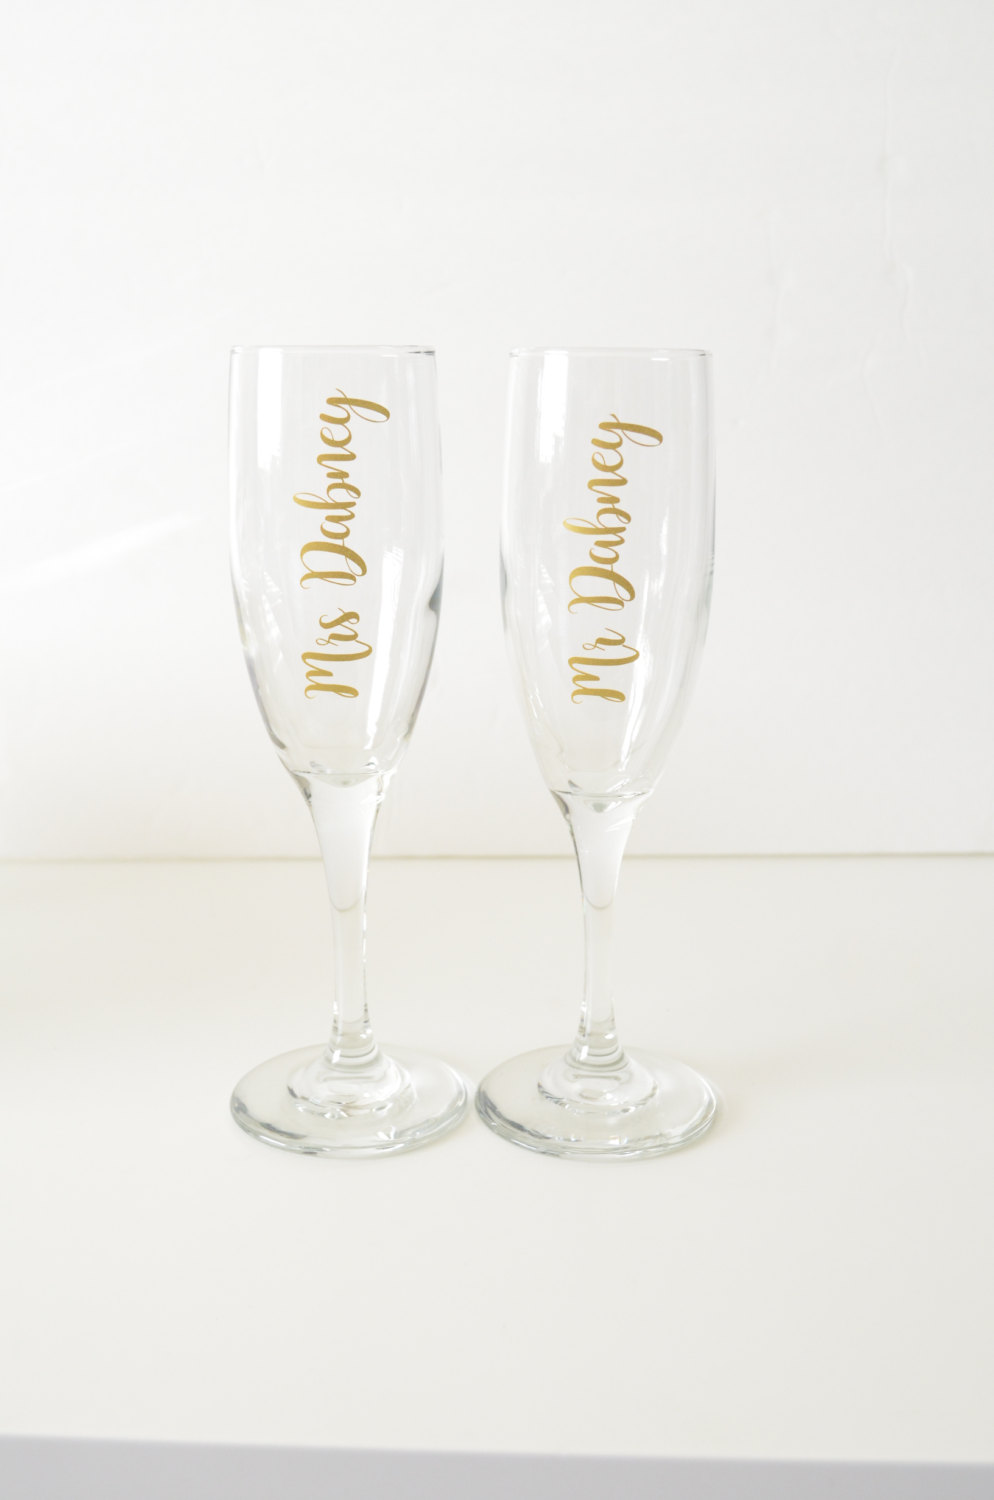 https://twistedhangers.com/wp-content/uploads/2017/03/custom-champagne-glasses-bride-toasting-glass-58cb627a1.jpg